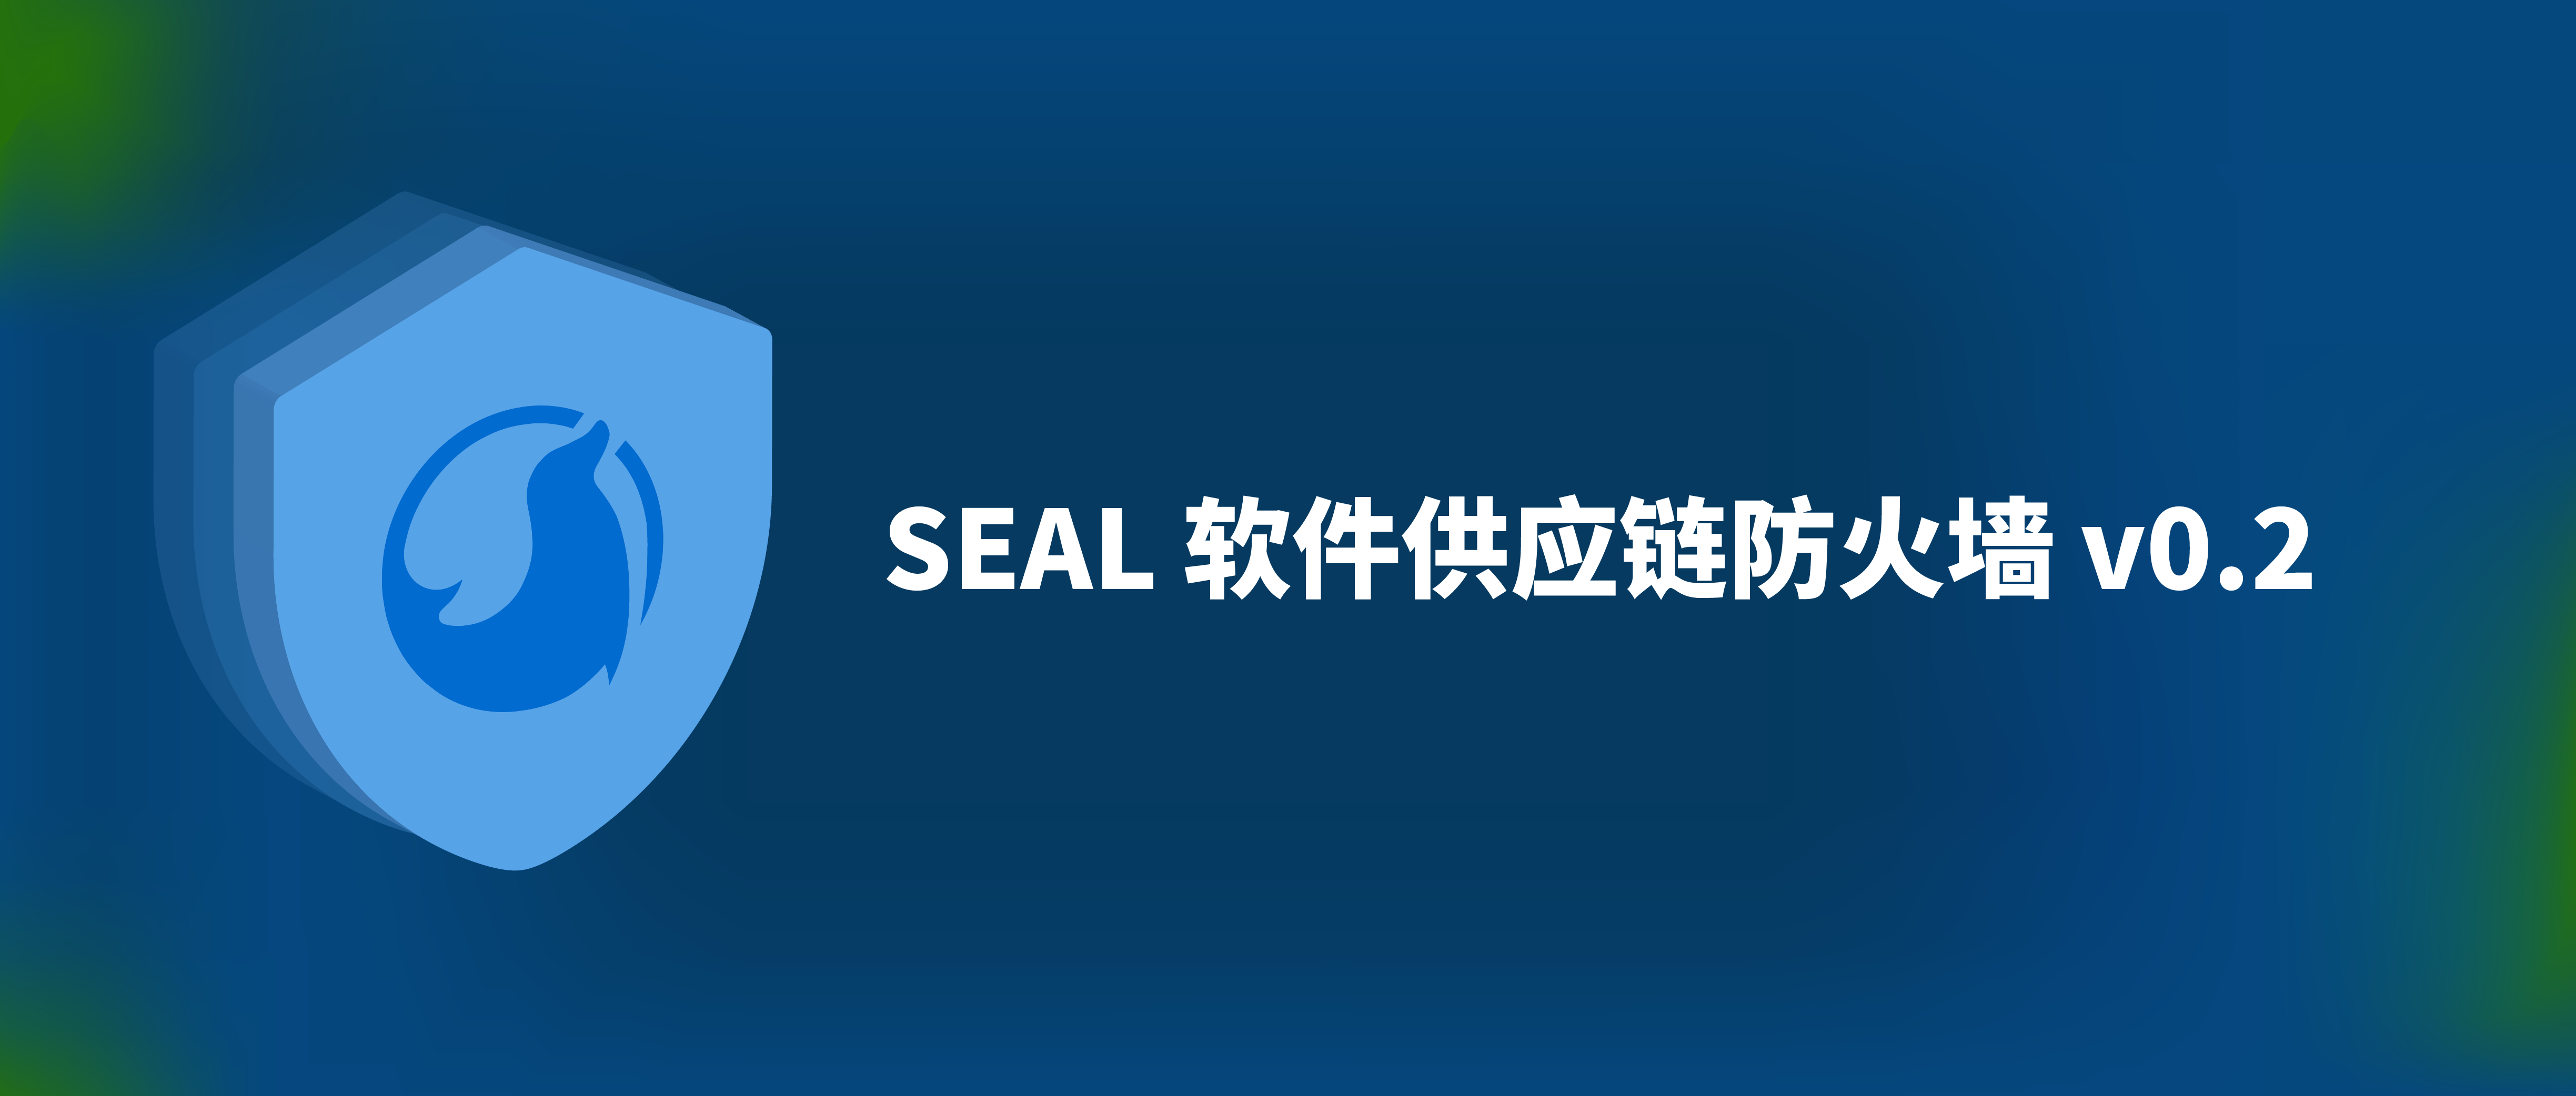 Seal 软件供应链防火墙 v0.2 发布，提供依赖项全局洞察